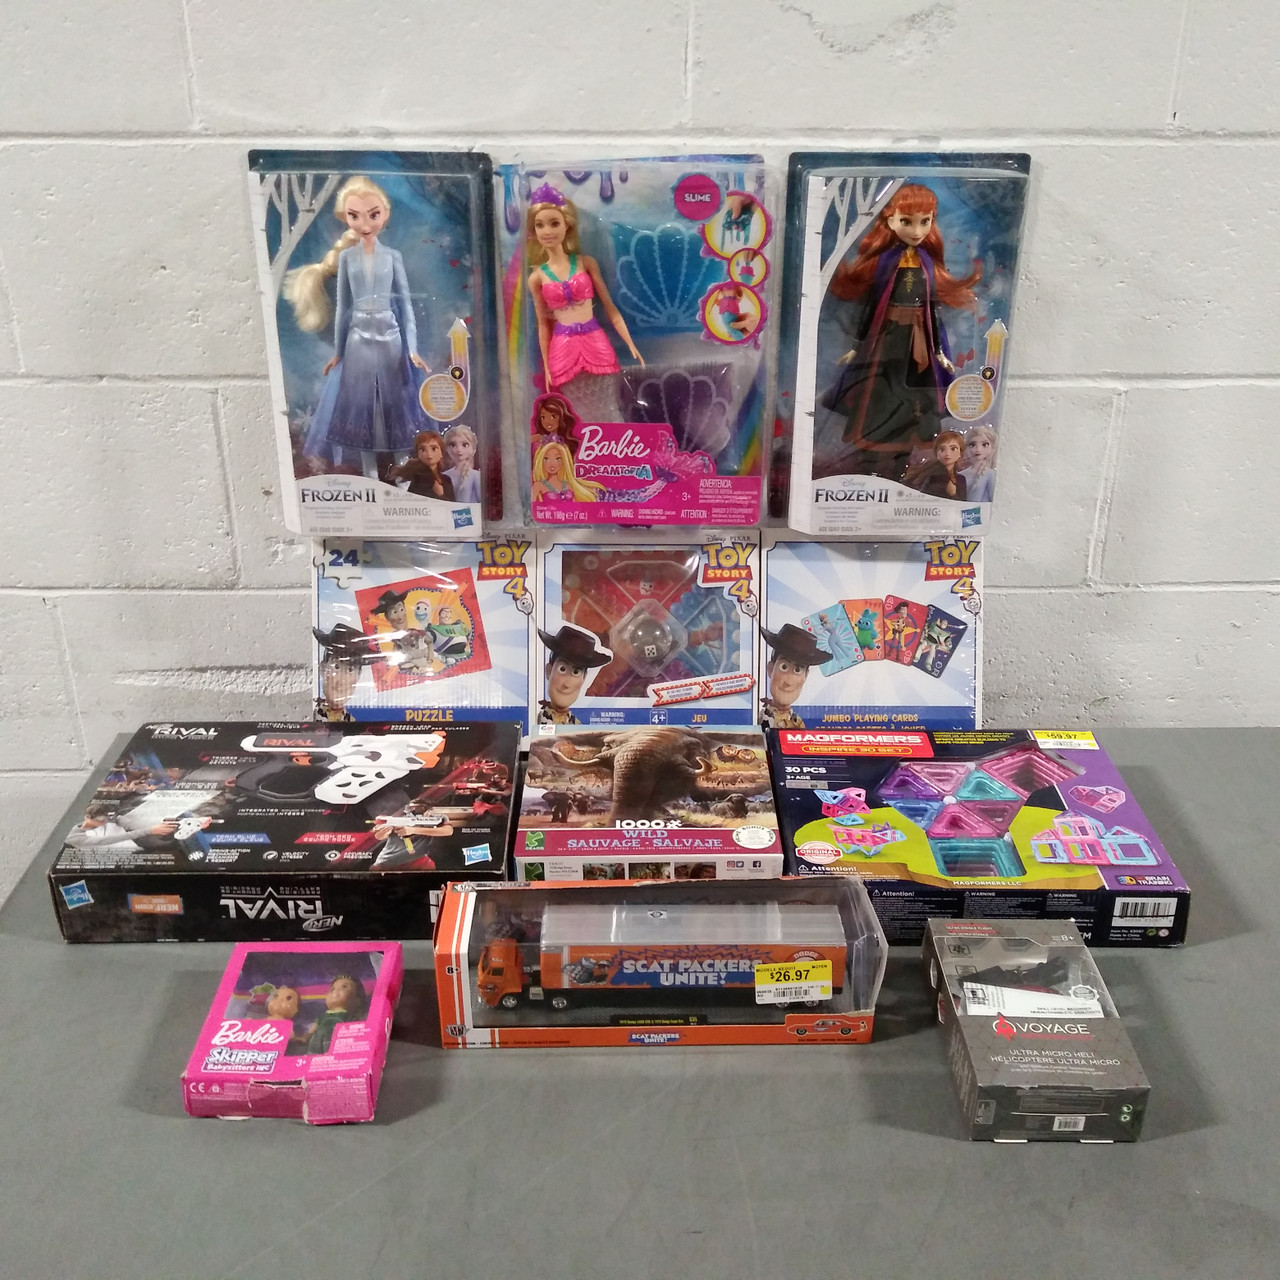 193 Units of Toys - MSRP 3514$ - Returns (Lot # 567951) - Restock Canada